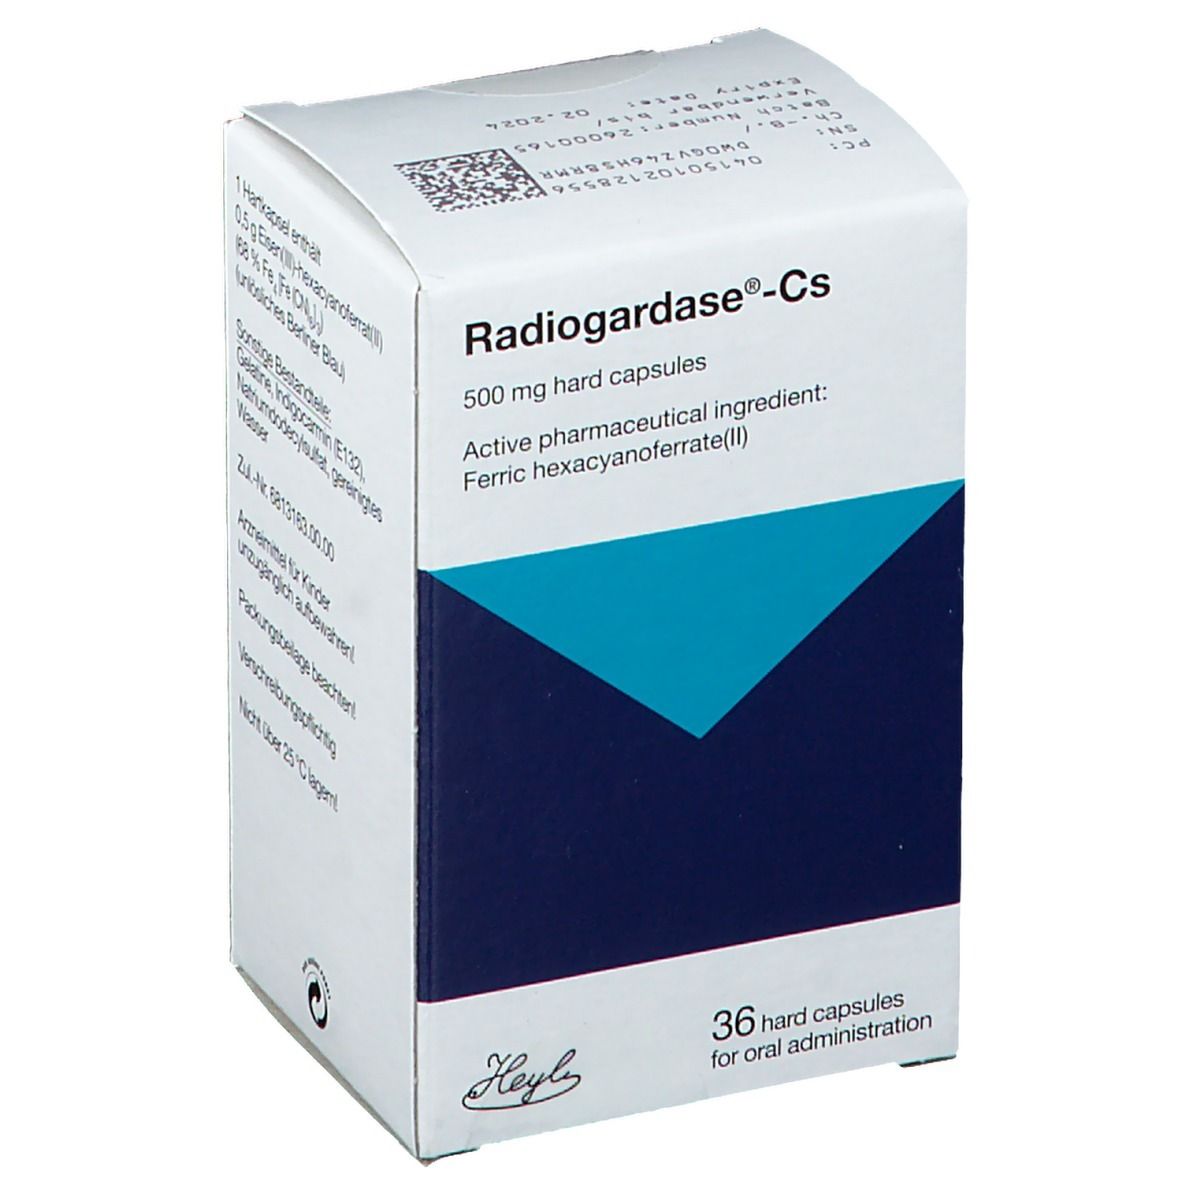 Radiogardase®-Cs 500 mg